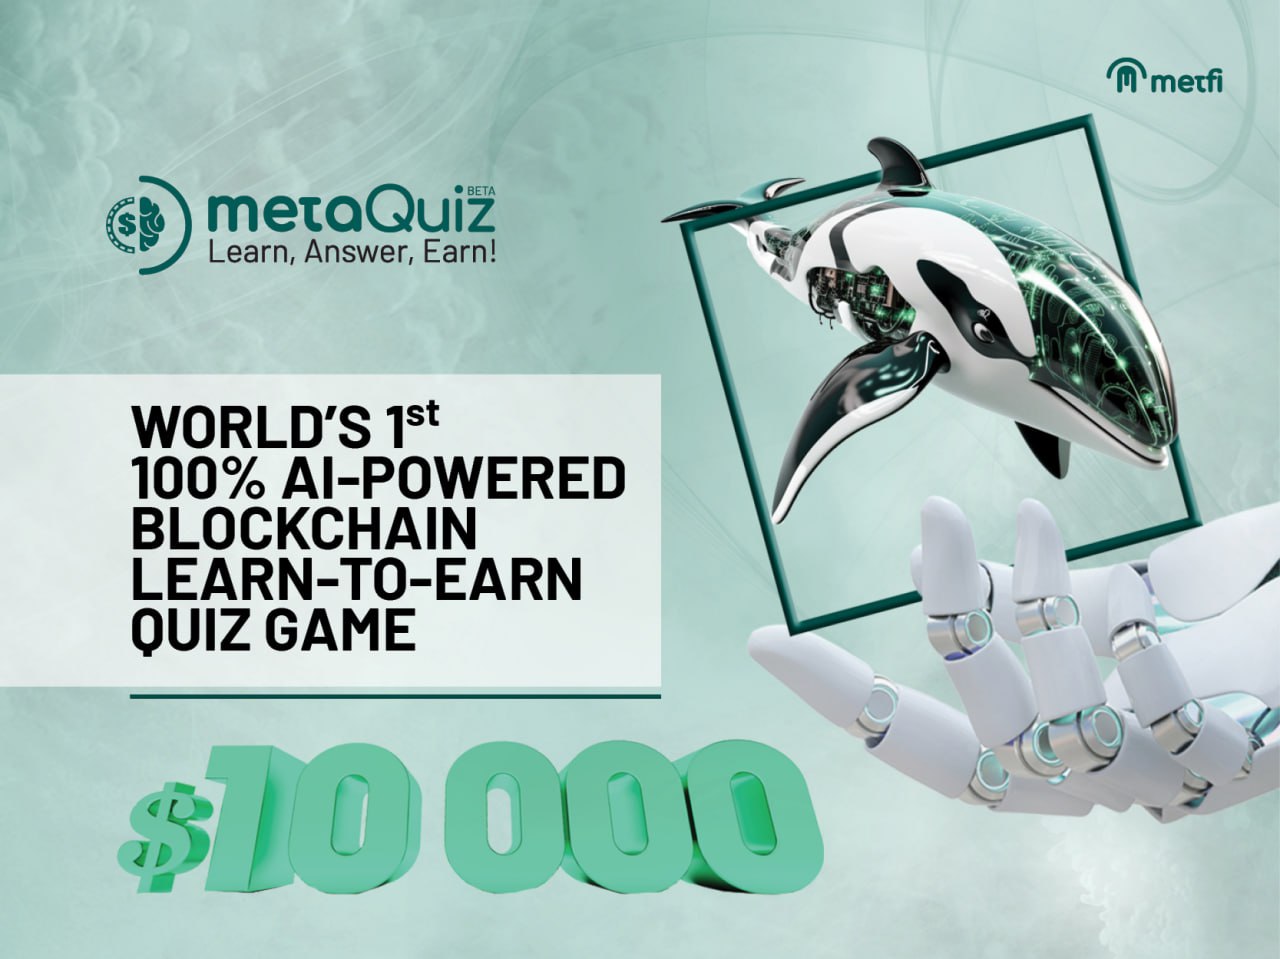 , MetaQuiz Set to Transform Digital Learning with MetFi’s Latest Enhancements